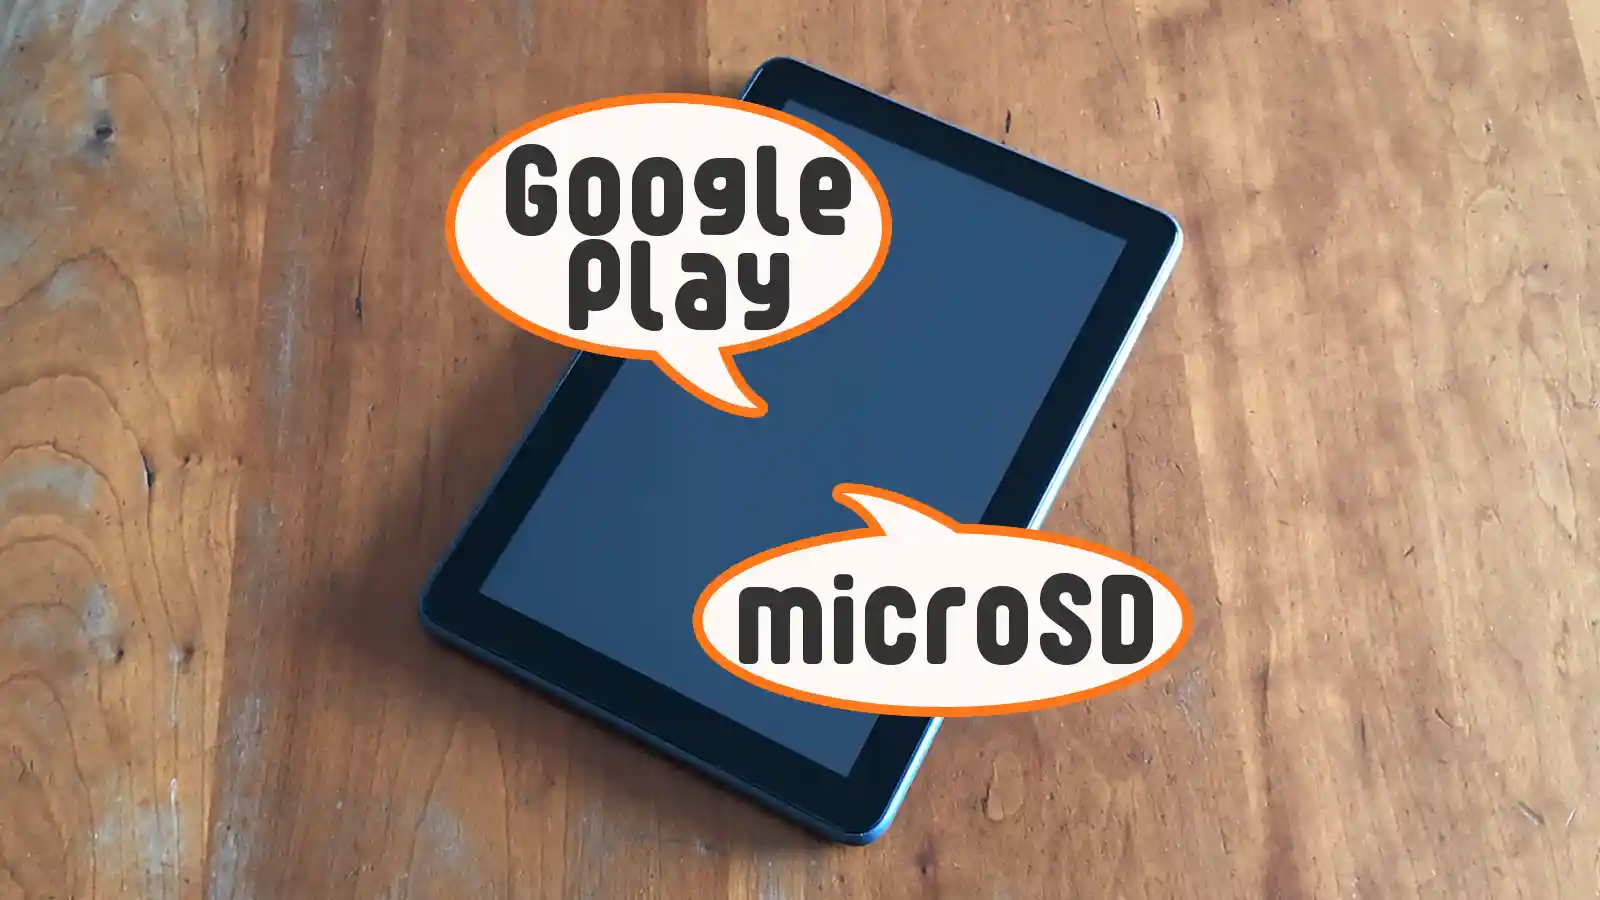 Amazon Fireタブレット GooglePlay microSDカード 内部ストレージ化